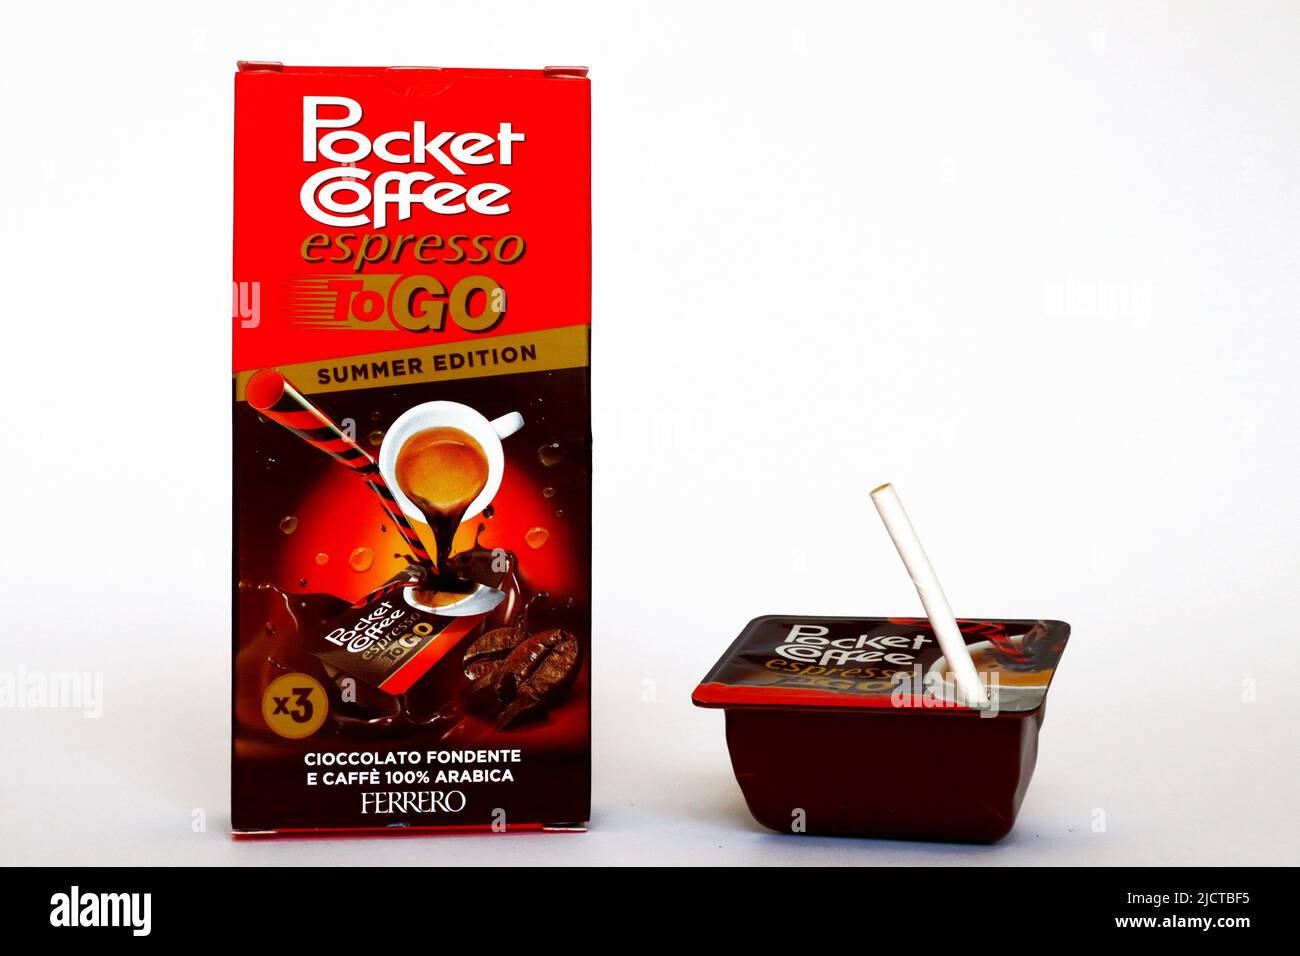 Ferrero Pocket Coffee Espresso To Go Summer Edition. Real liquid